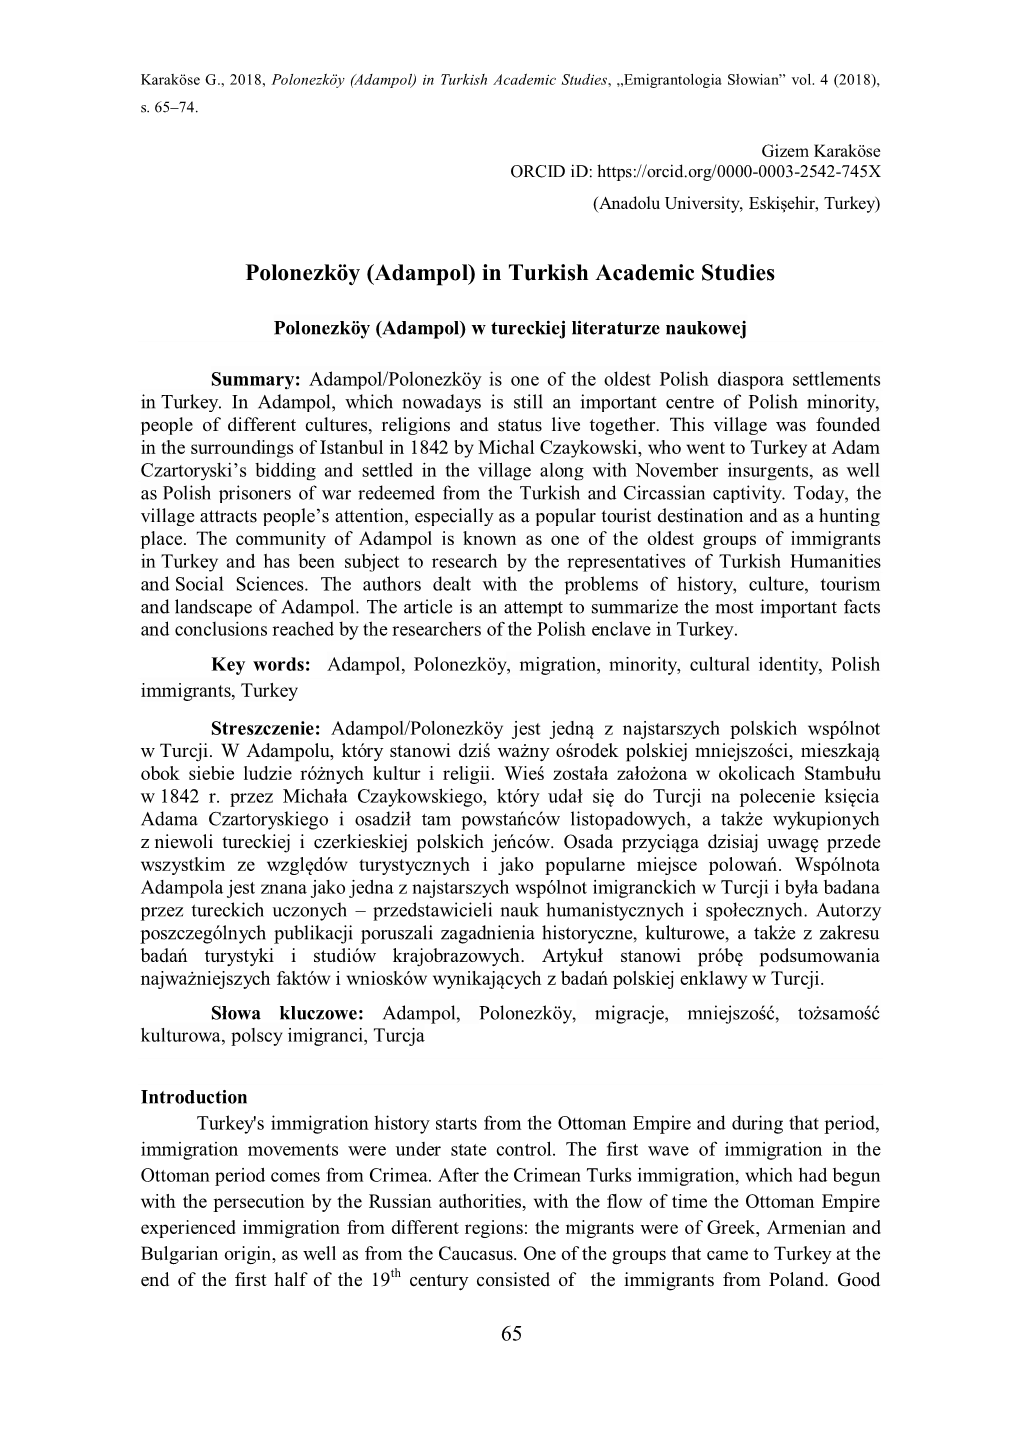 Polonezköy (Adampol) in Turkish Academic Studies, „Emigrantologia Słowian” Vol